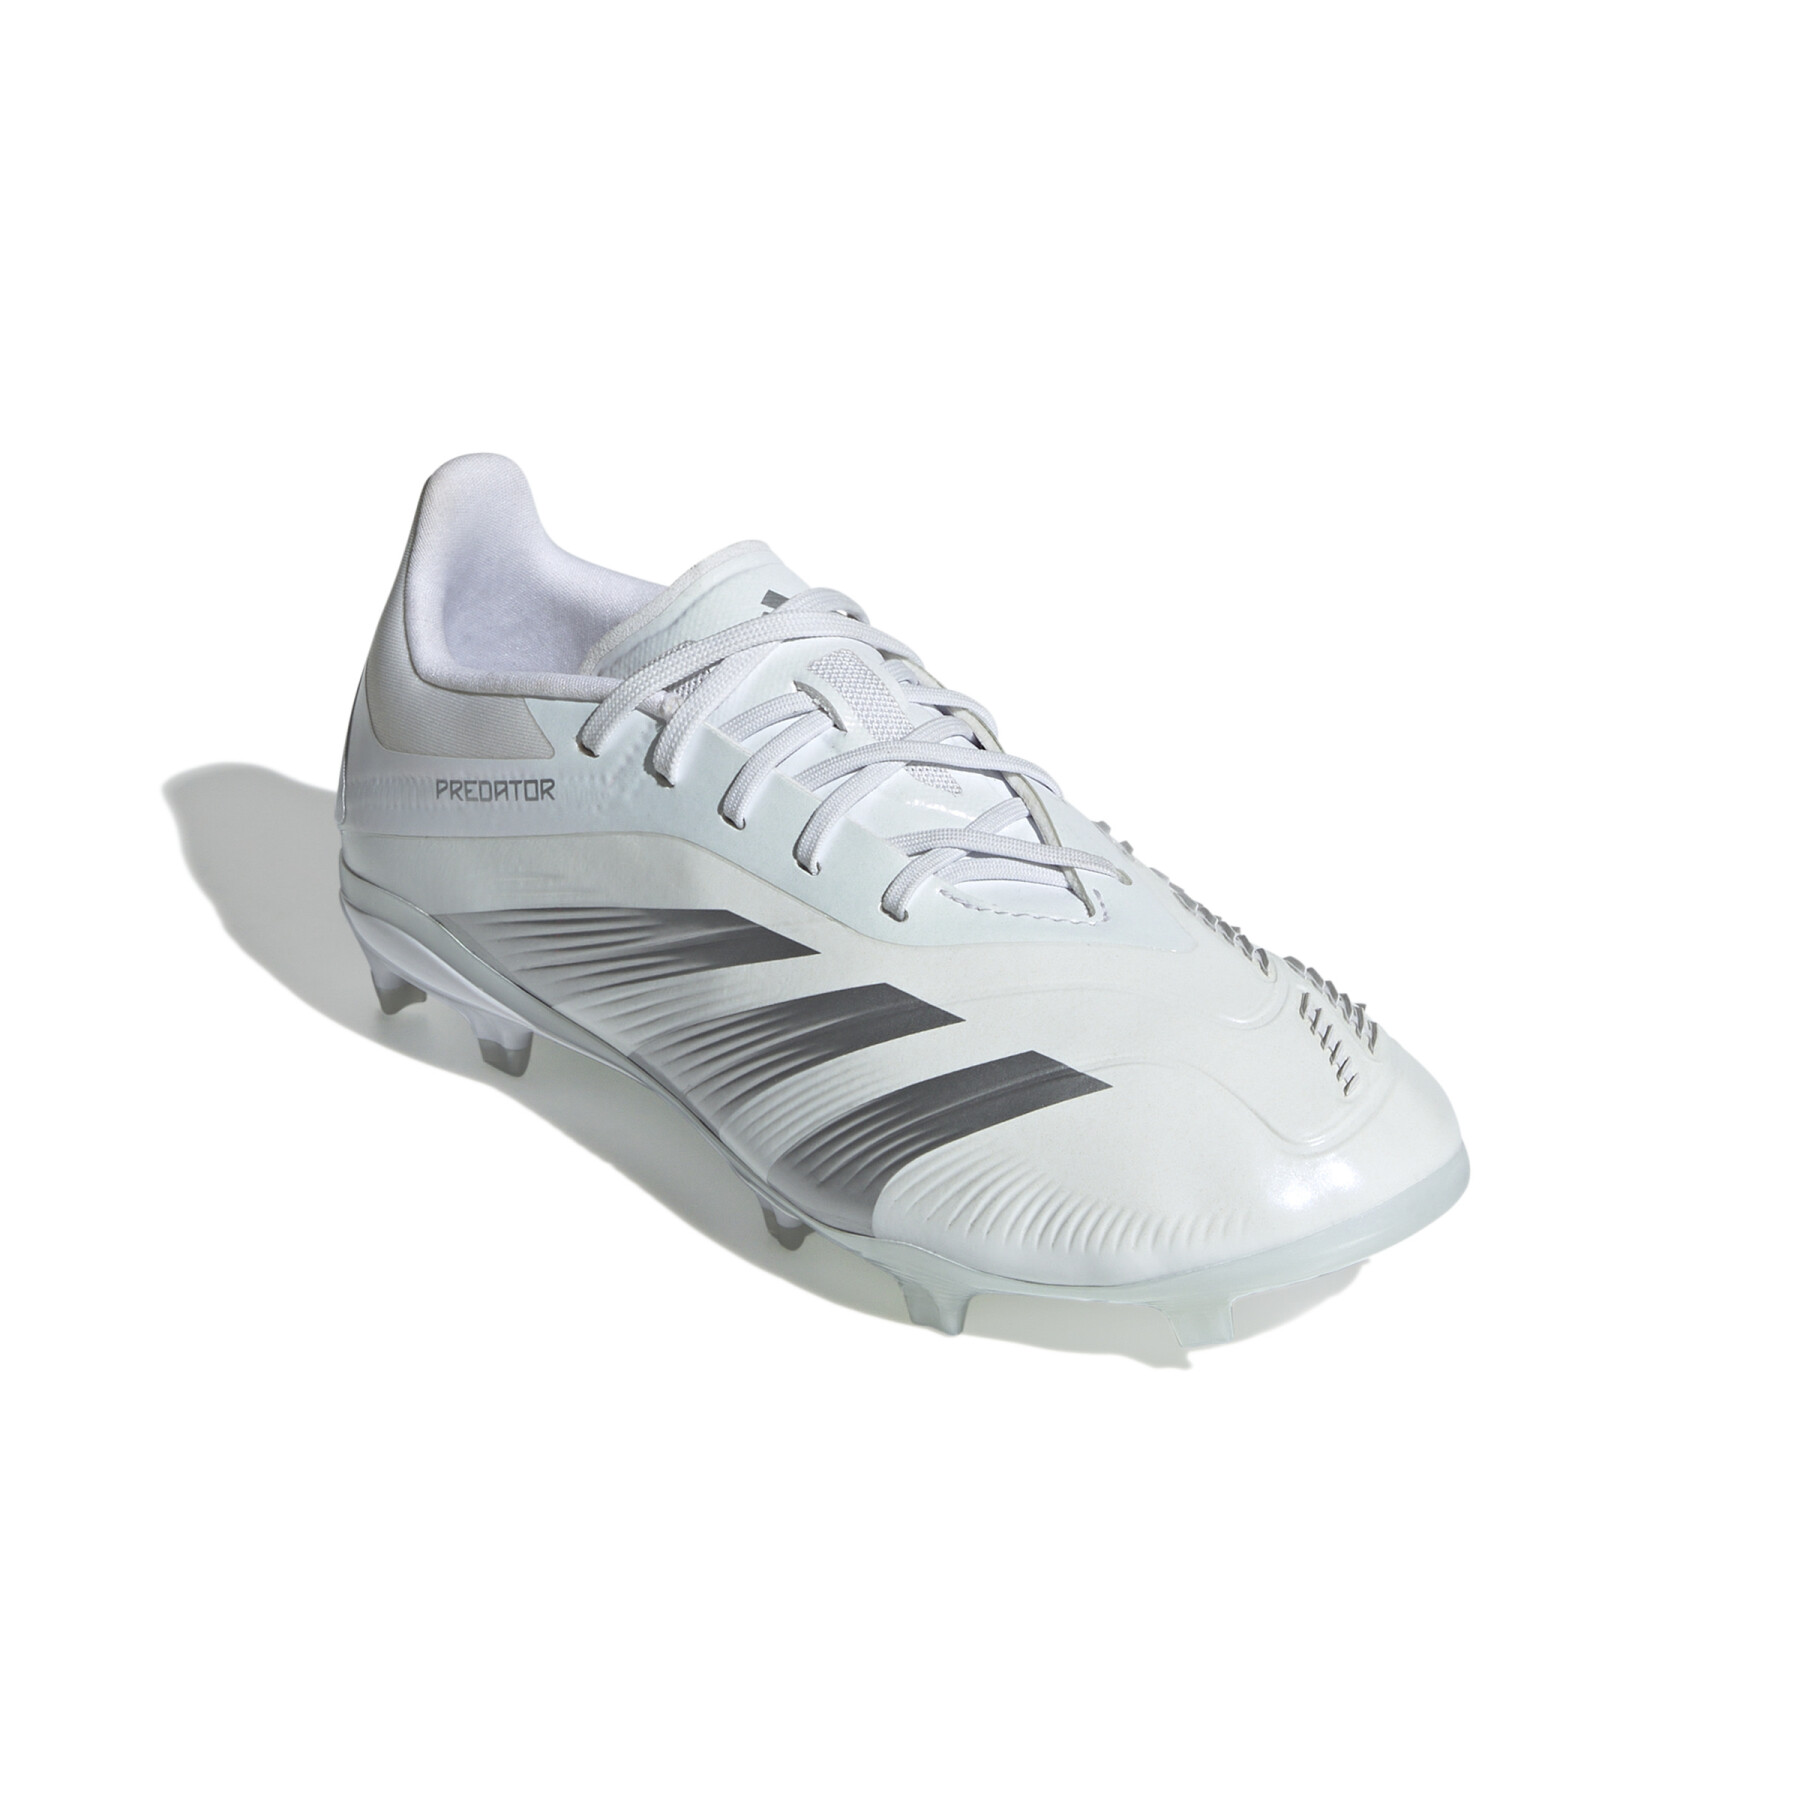 Children's soccer shoes adidas Predator FG